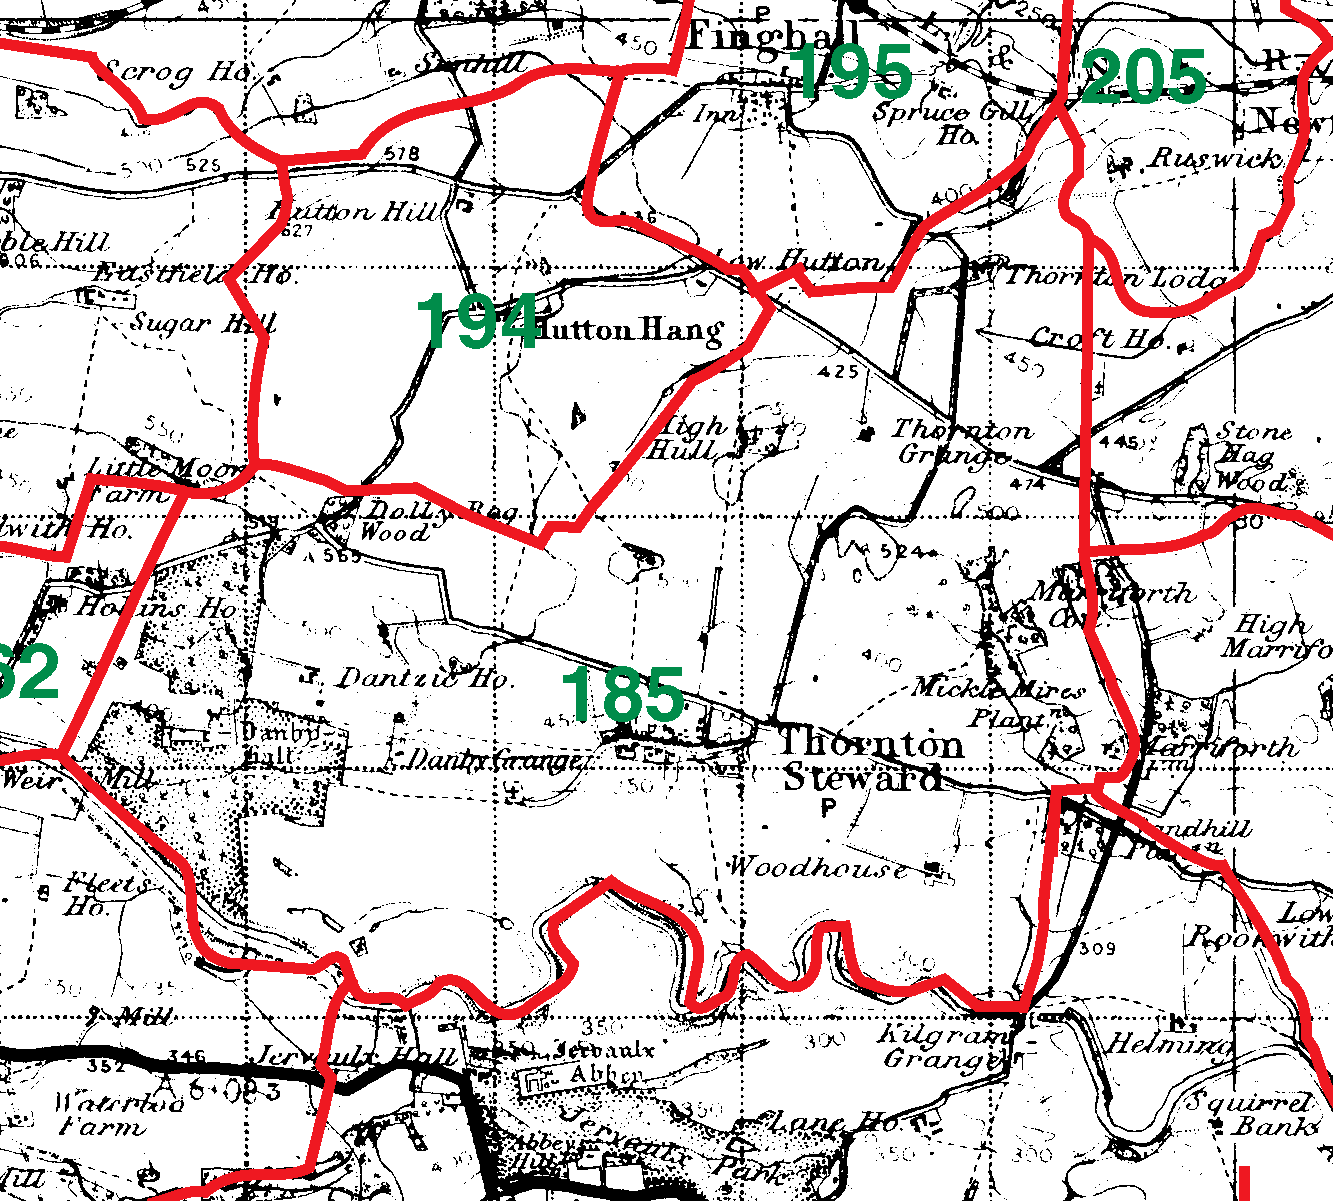 Thornton Steward boundaries map